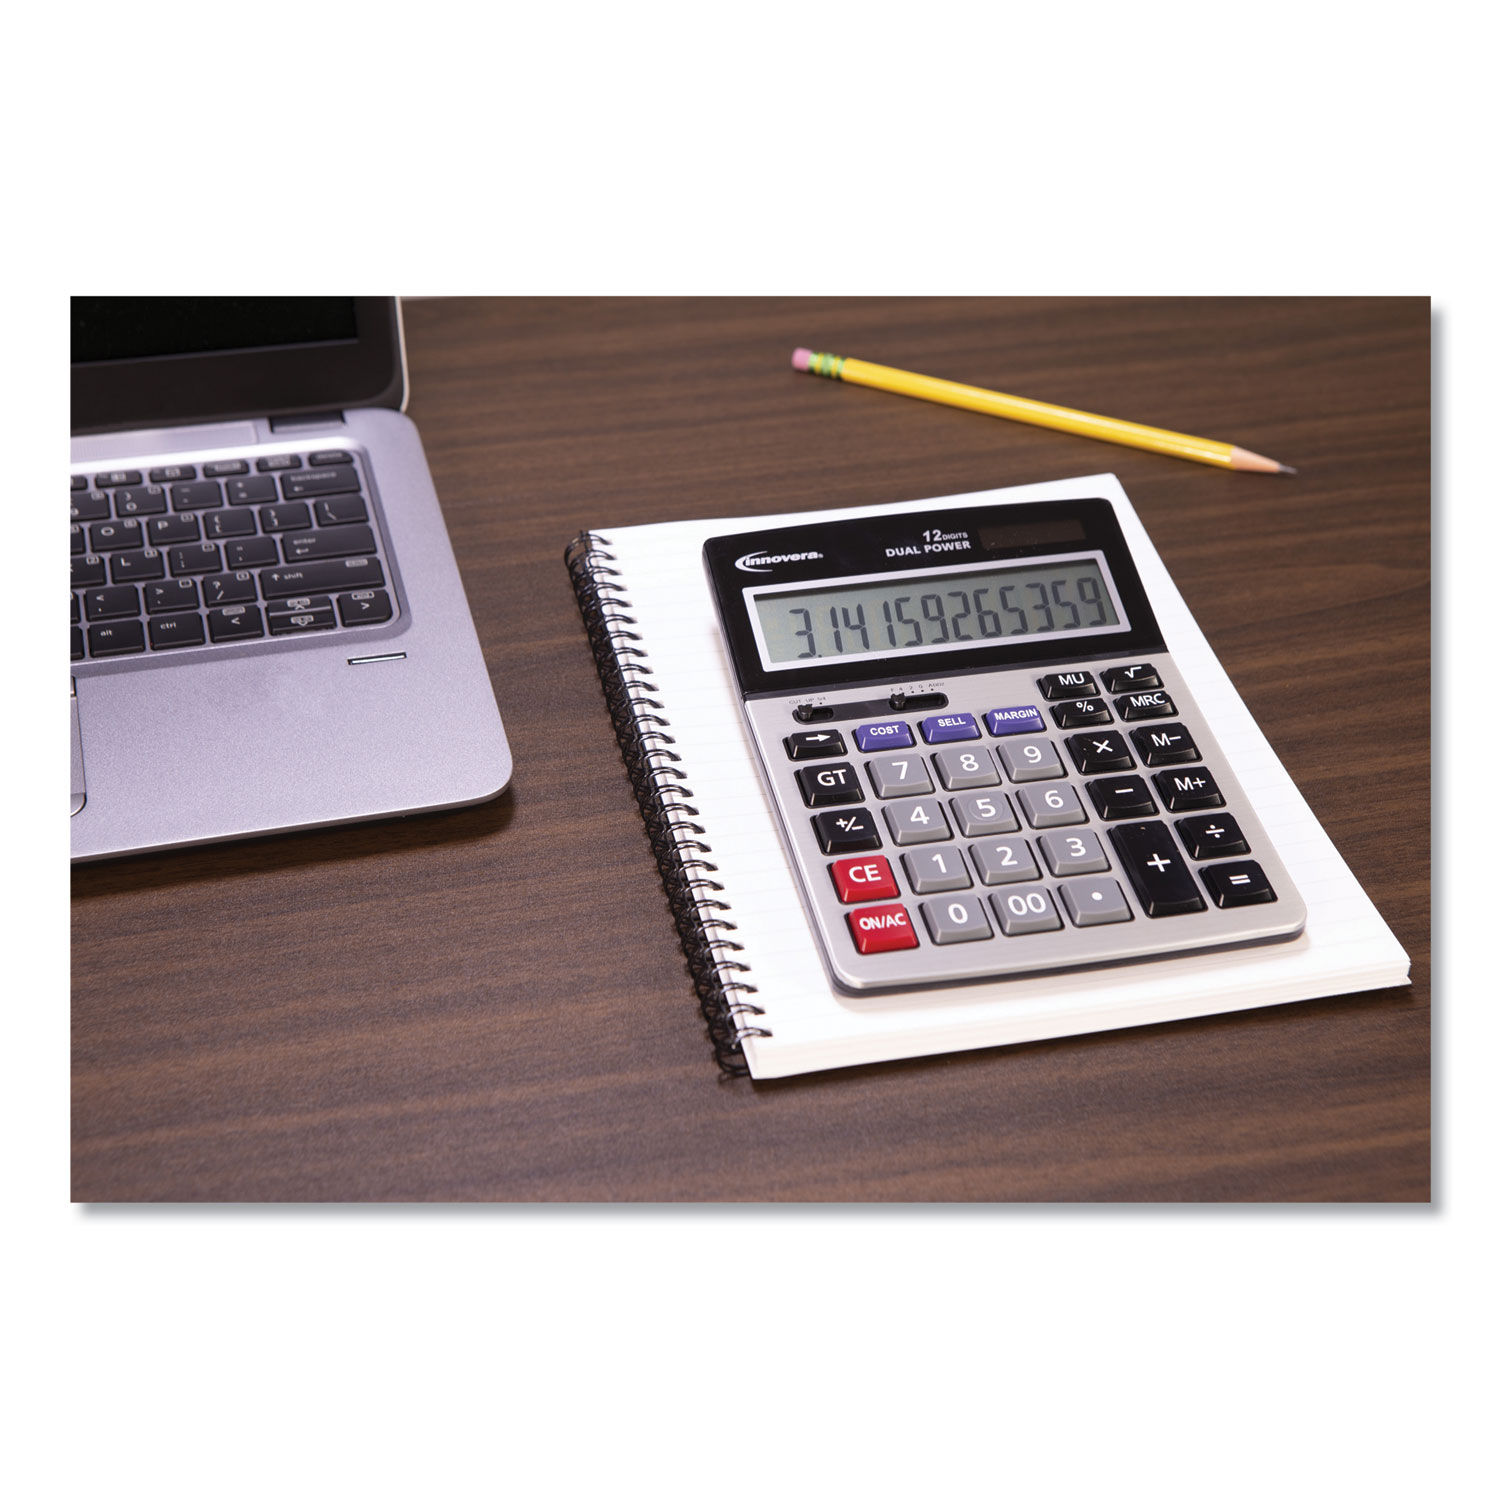 15968 Profit Analyzer Calculator by Innovera® IVR15968